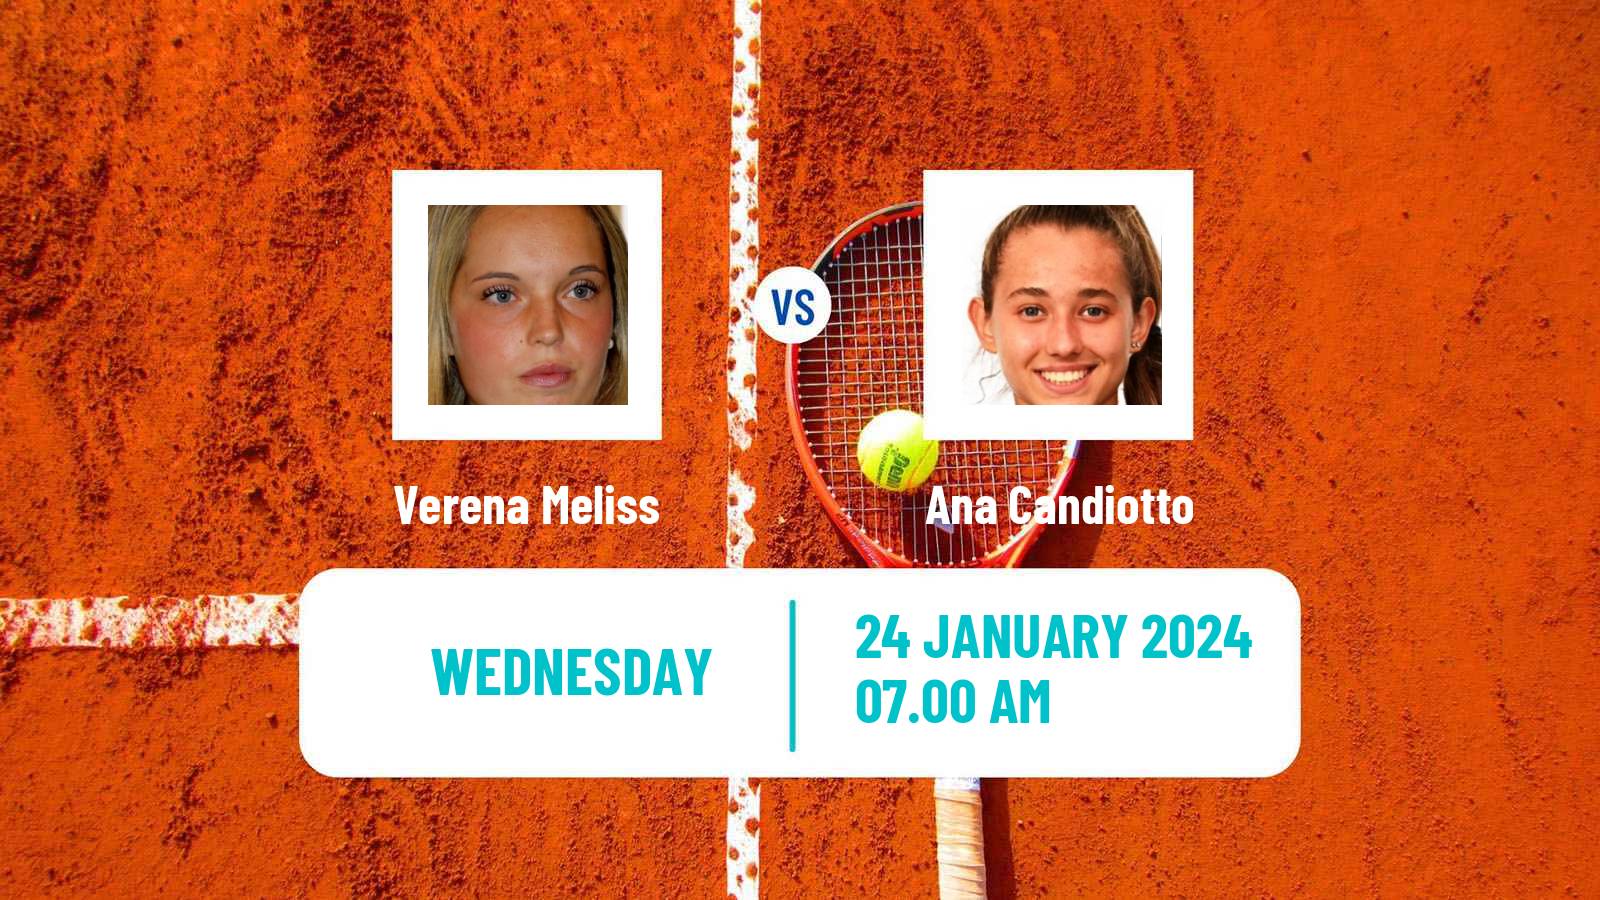 Tennis ITF W35 Buenos Aires 2 Women Verena Meliss - Ana Candiotto